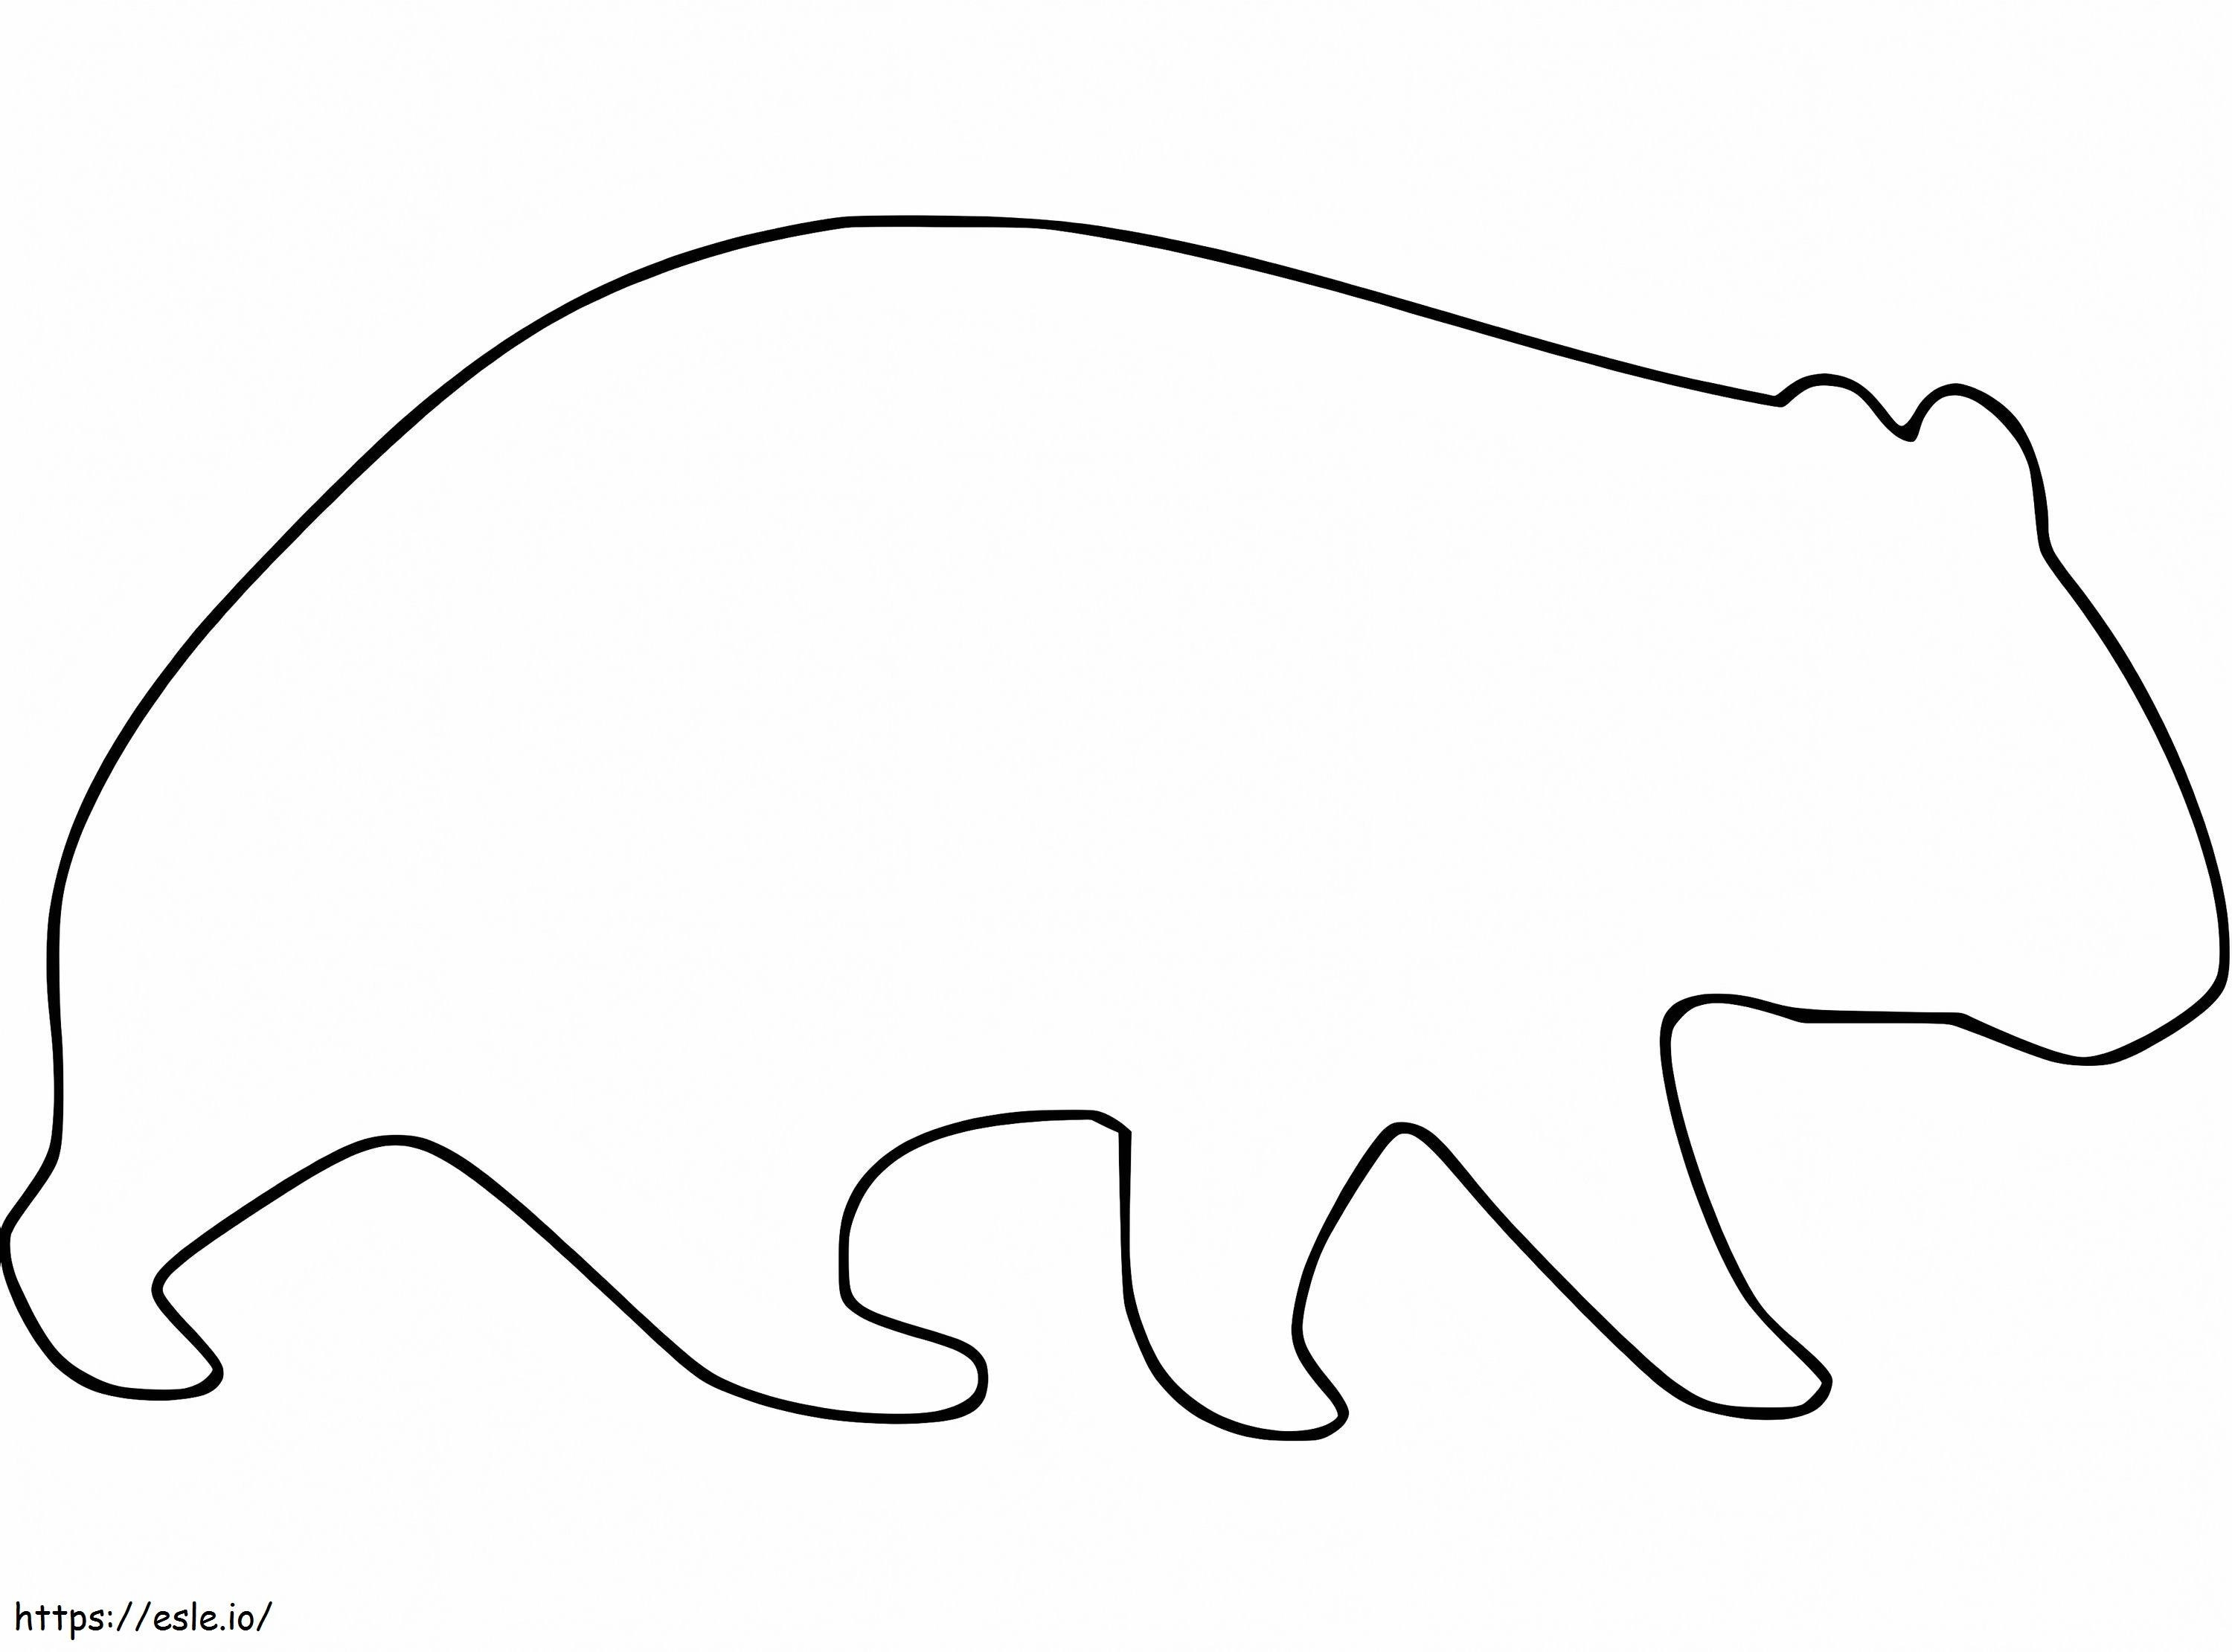 Wombat-Umriss ausmalbilder